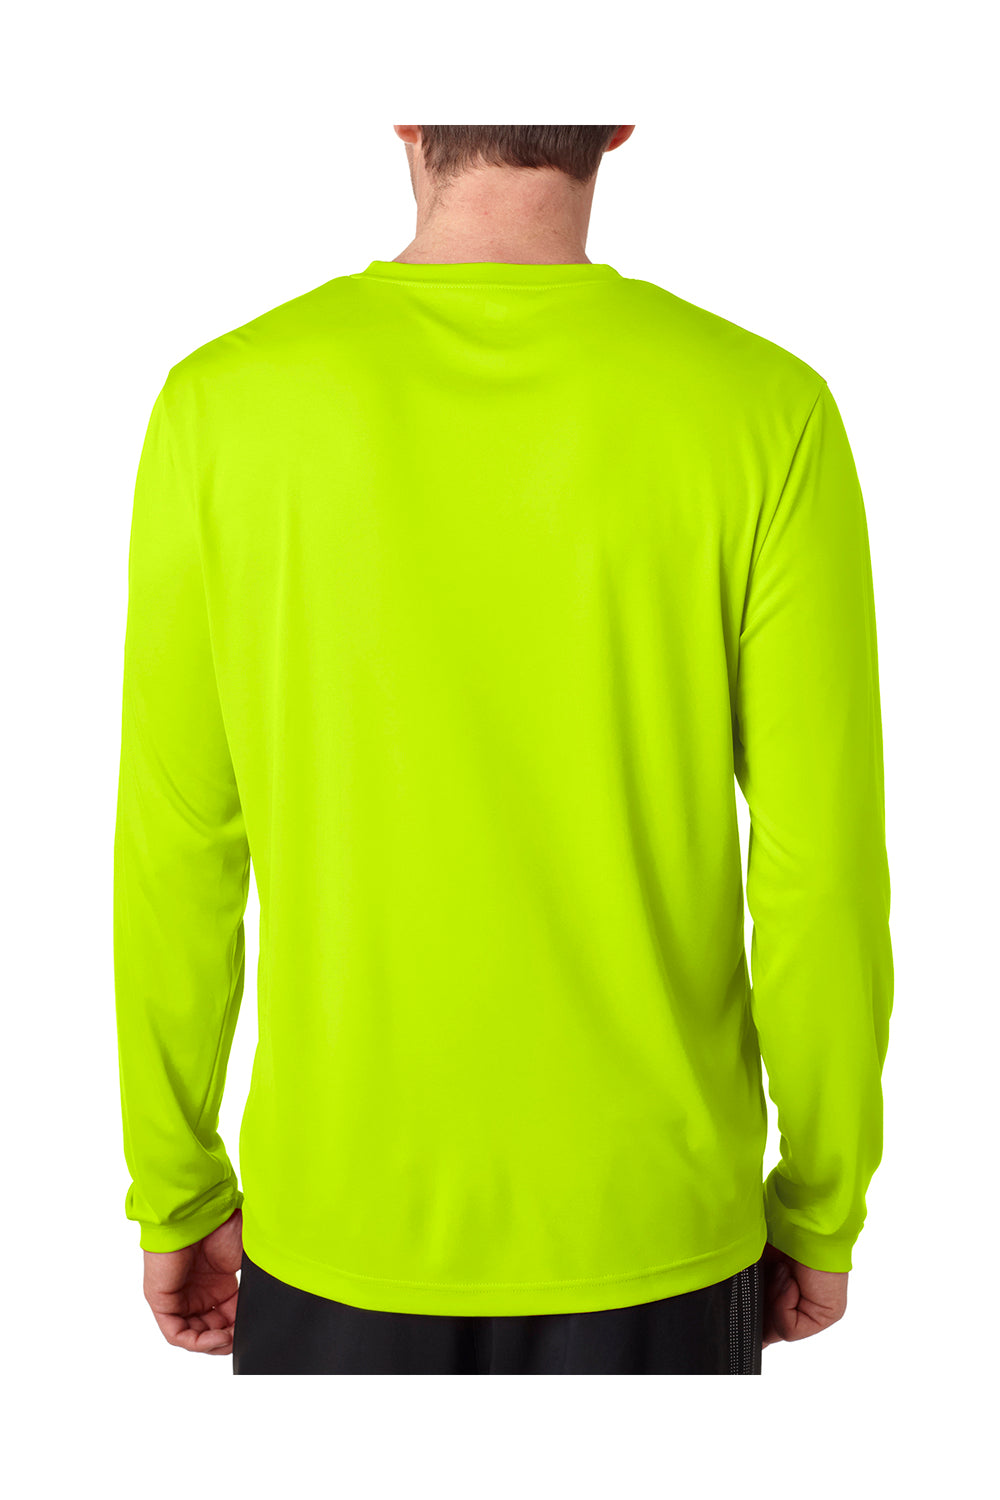 Hanes Cool Dri neon orange long sleeve t-shirt.